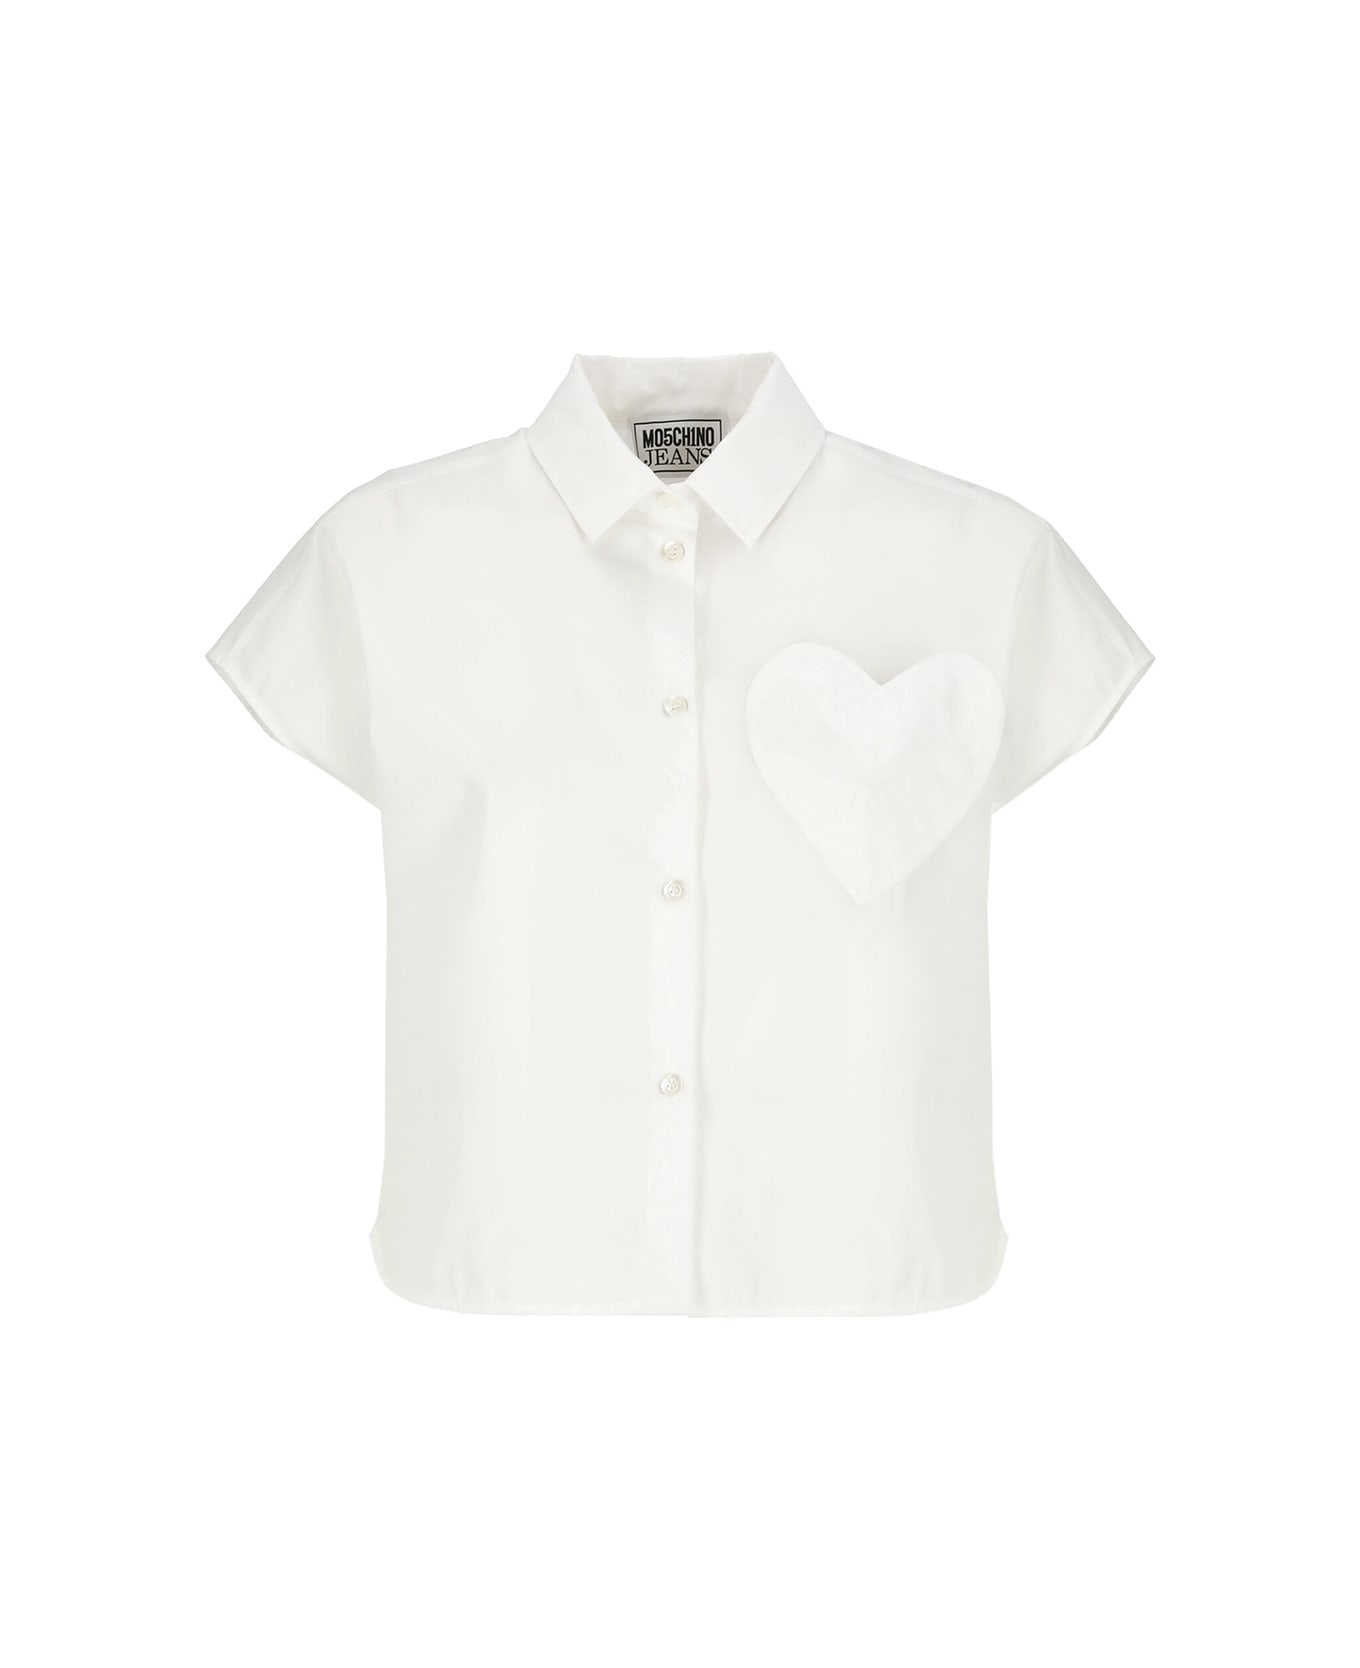 M05CH1N0 Jeans Cotton Shirt - White シャツ